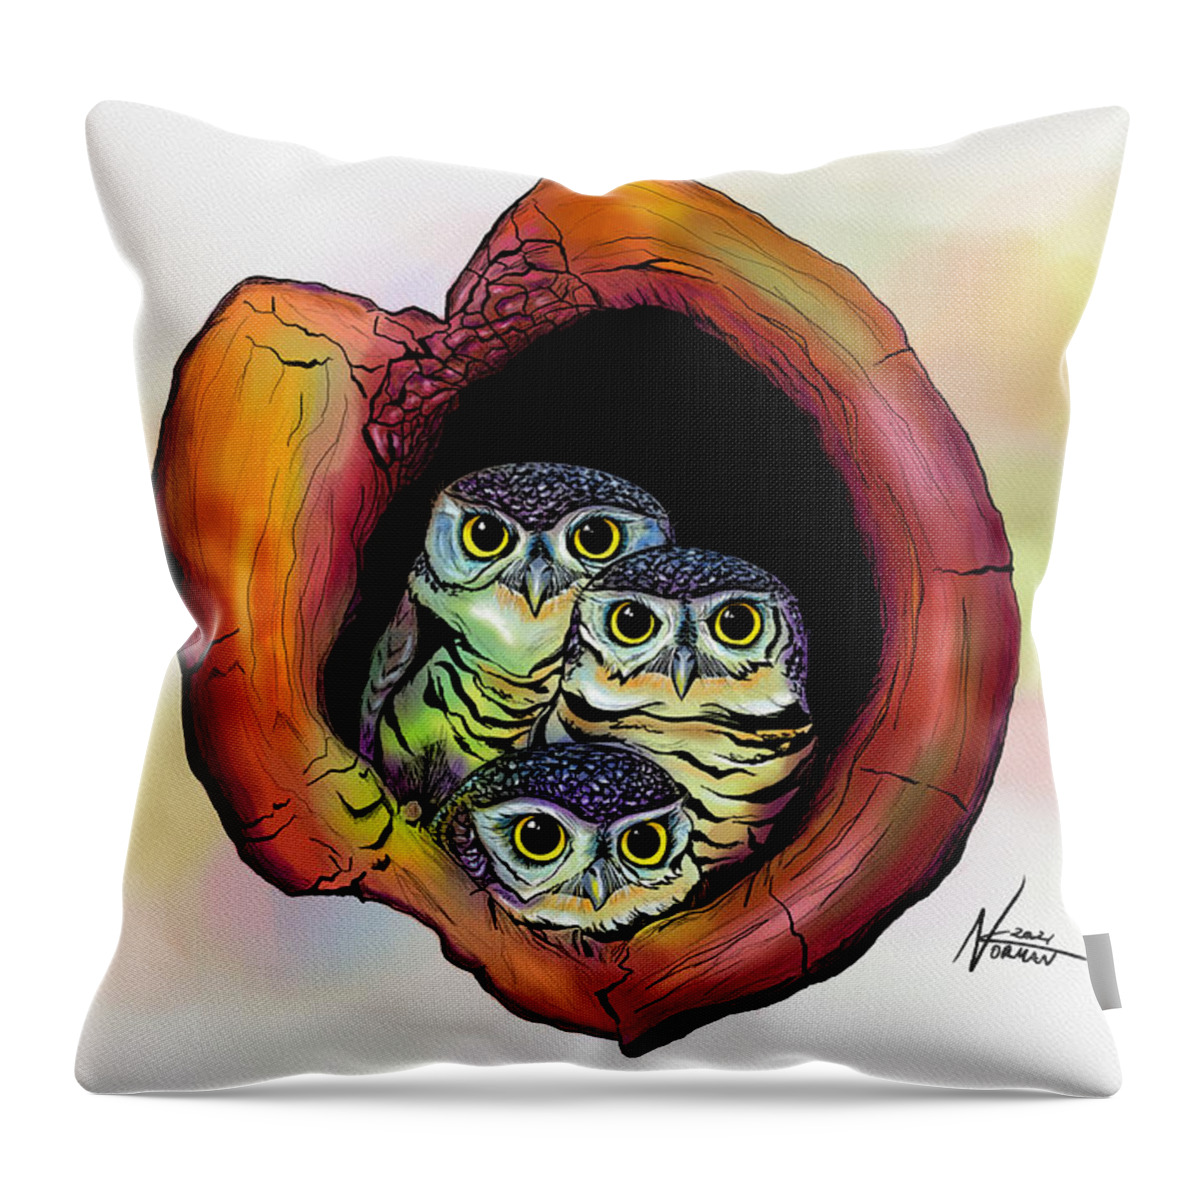 Wildlife Throw Pillow featuring the digital art Three Owls by Norman Klein